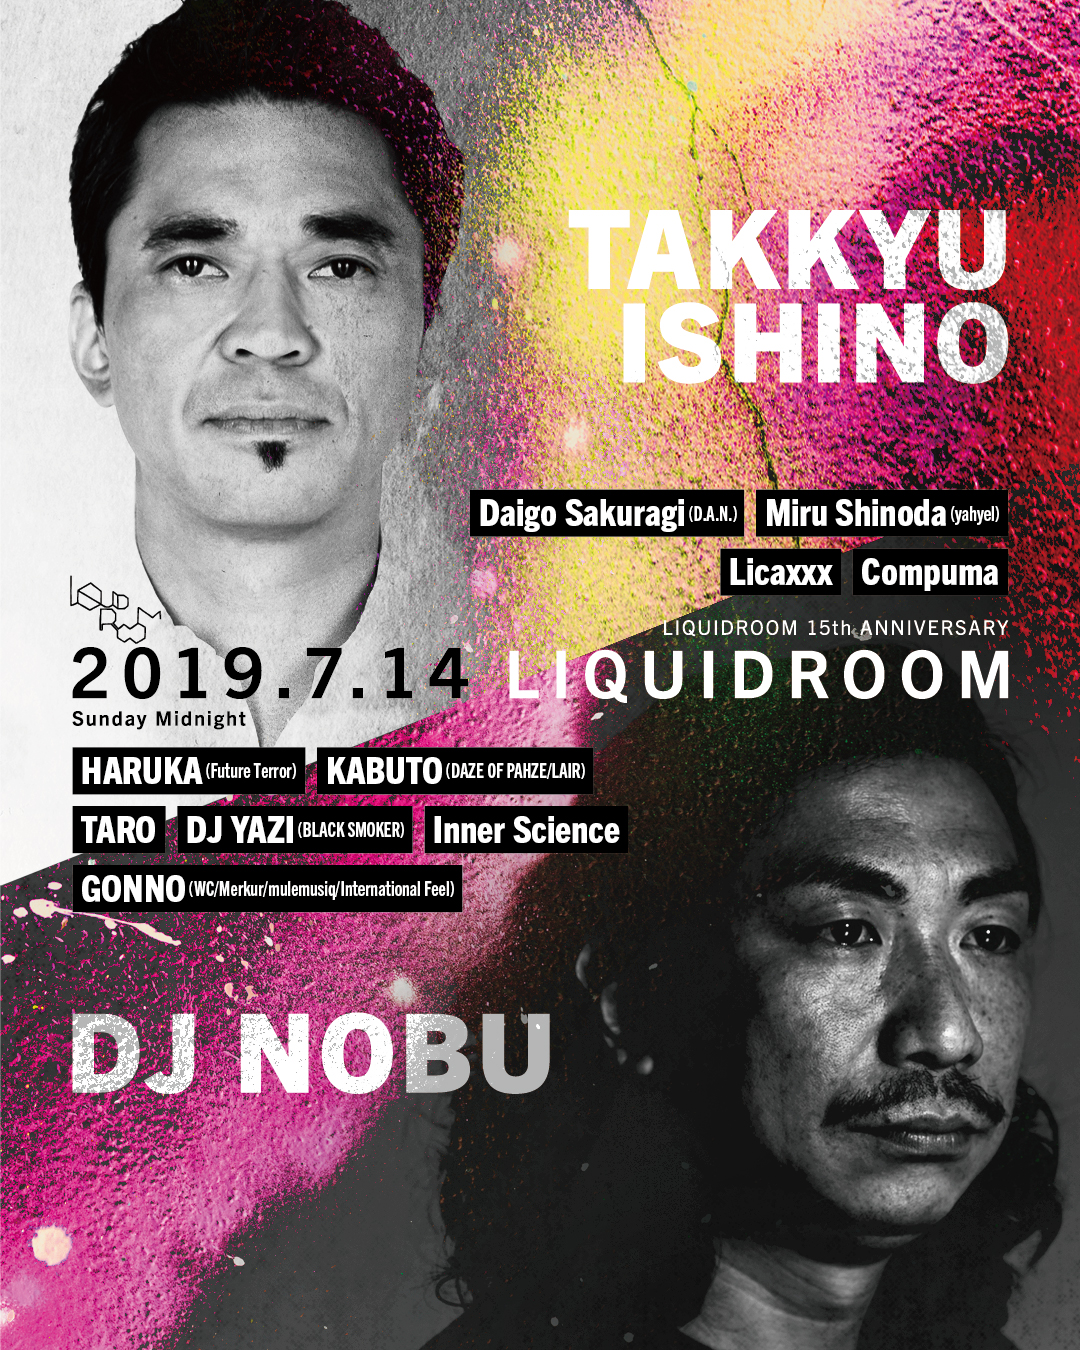 TAKKYU ISHINO / DJ NOBU